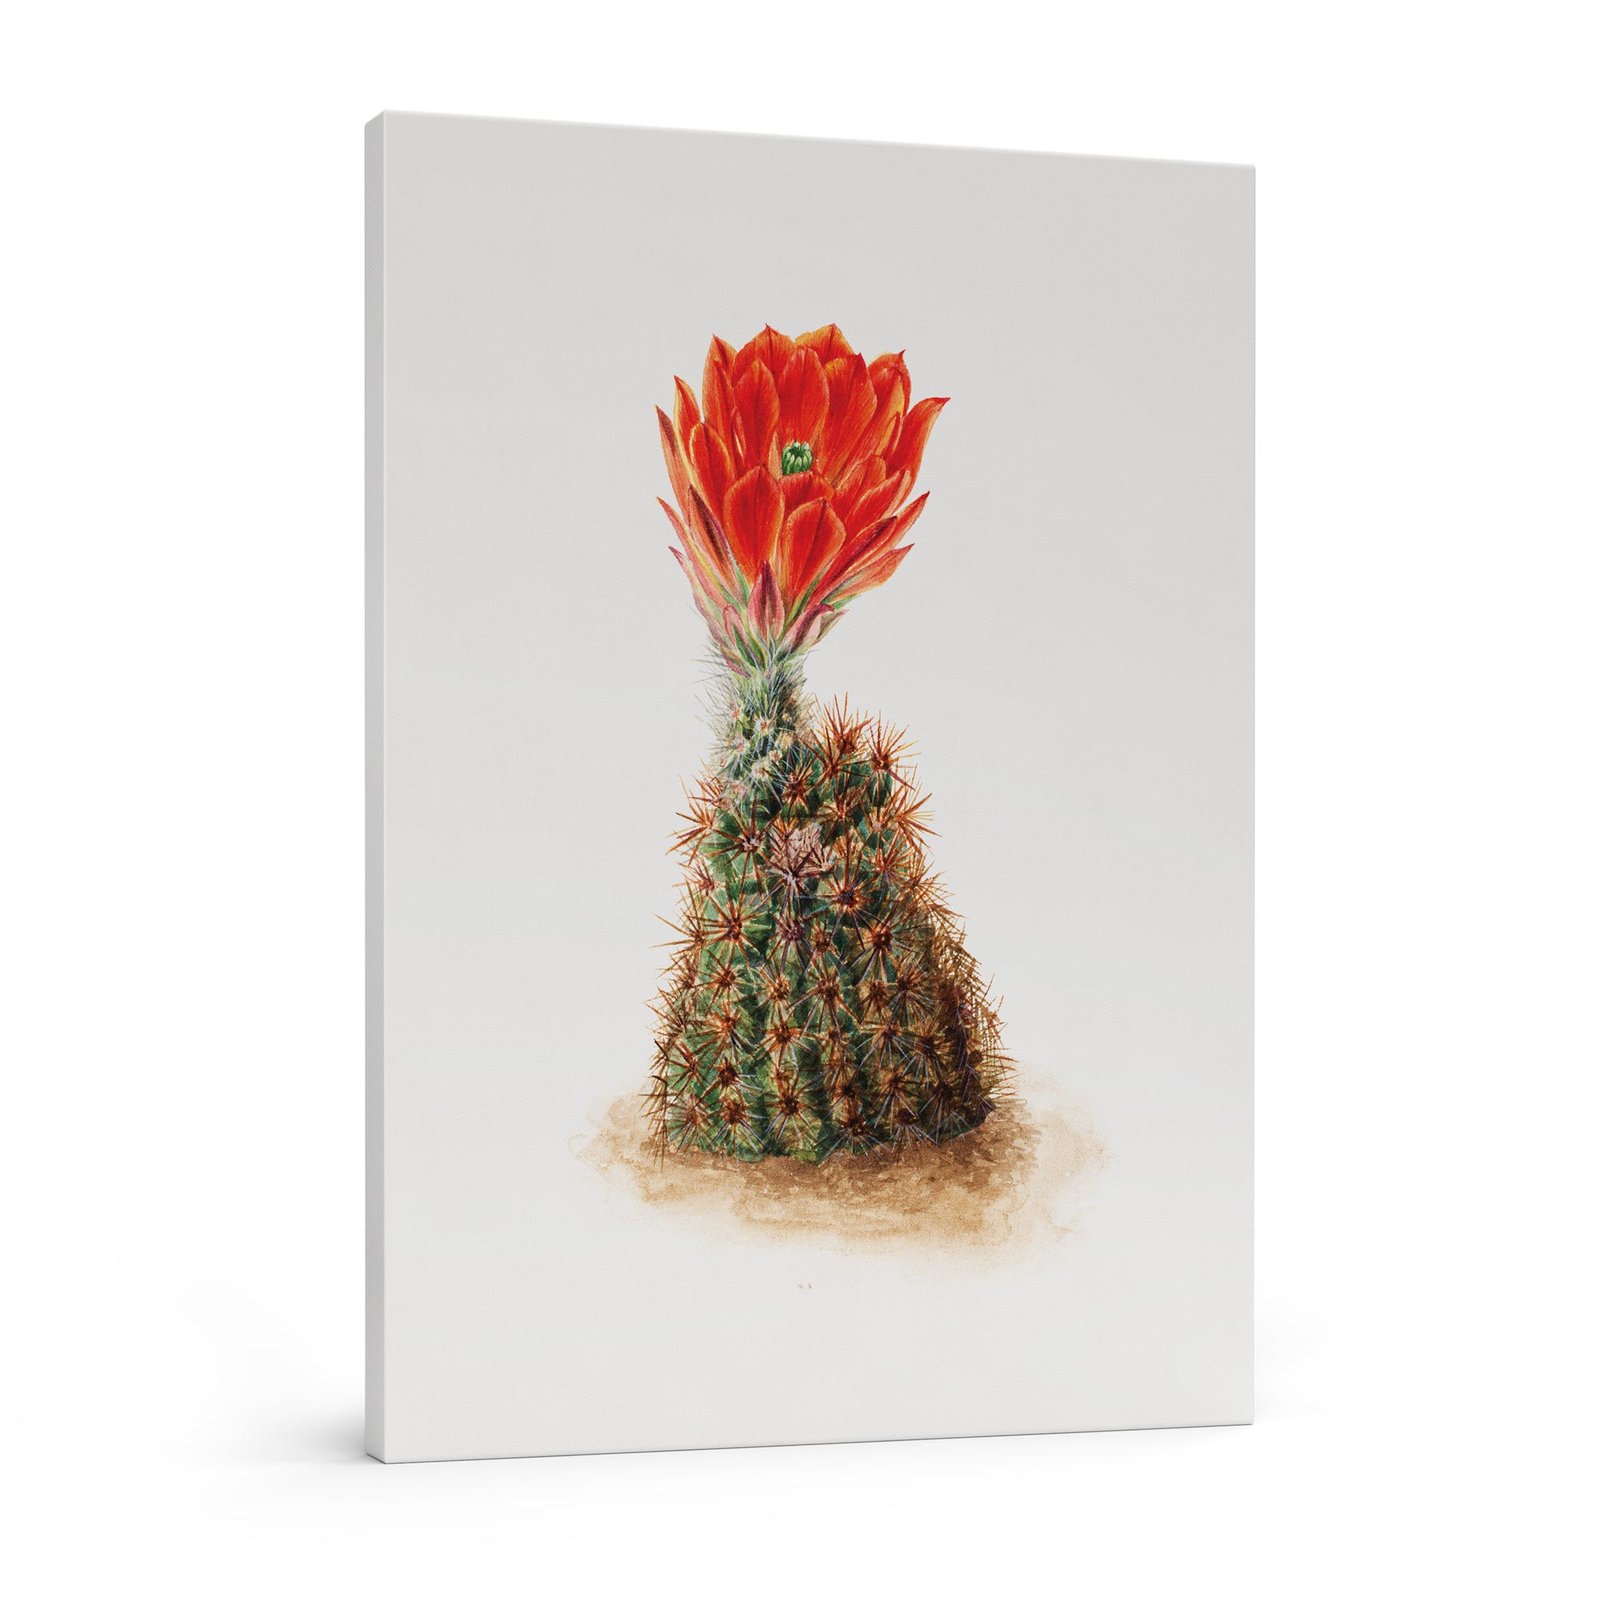 216-grazus paveikslai - Kaktusas nakties karalienė - Mary Vaux Walcott